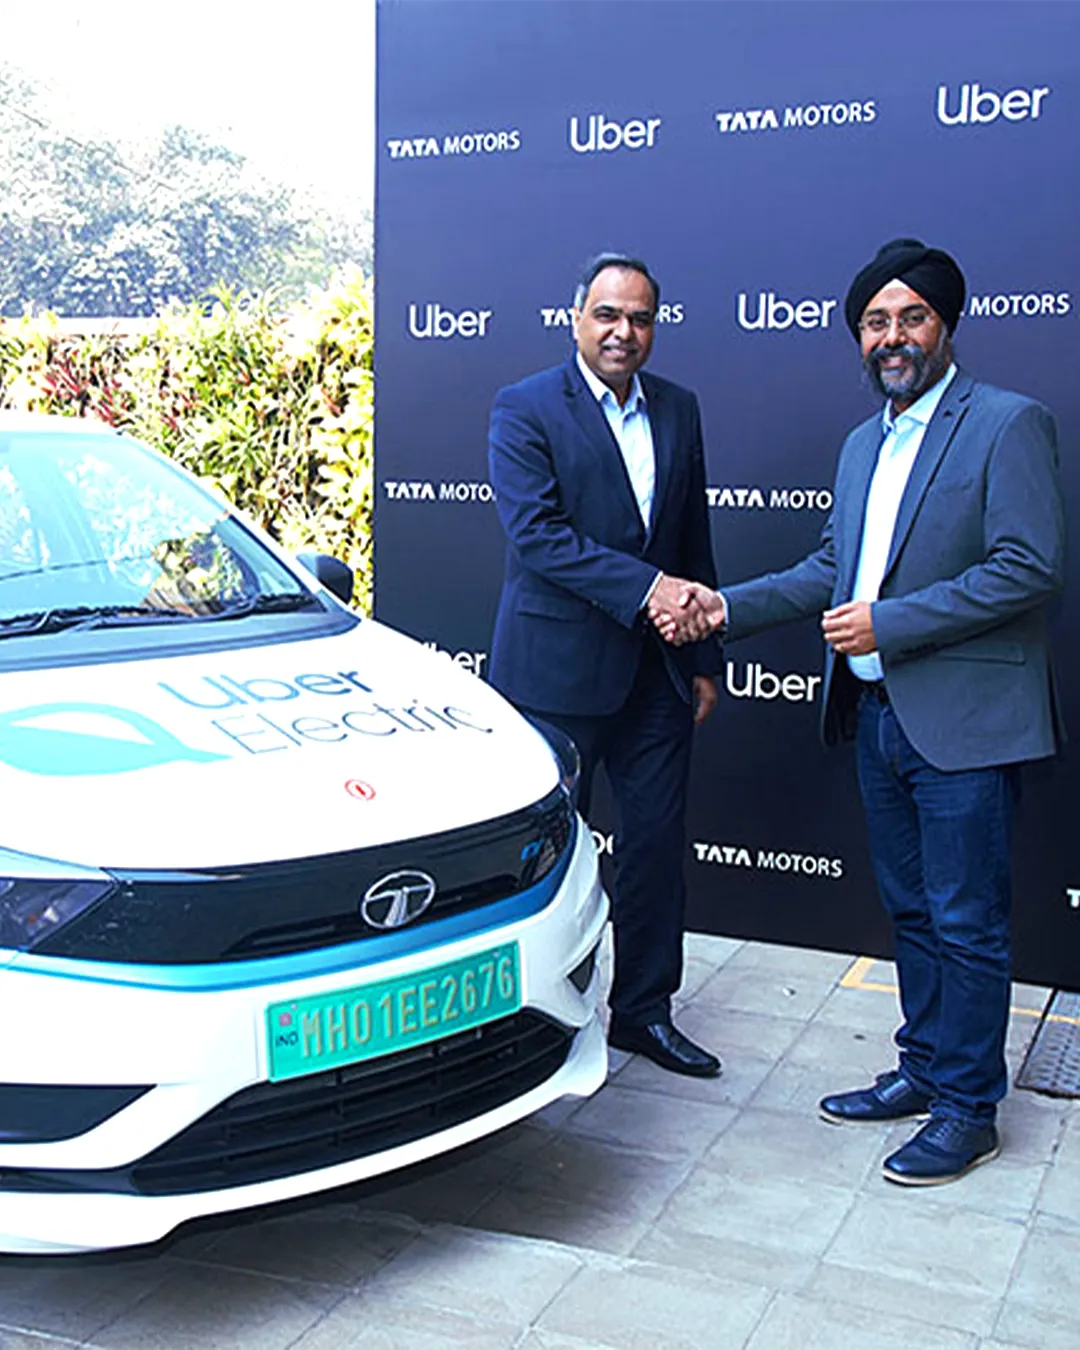 Uber-Tata Partnership Plans